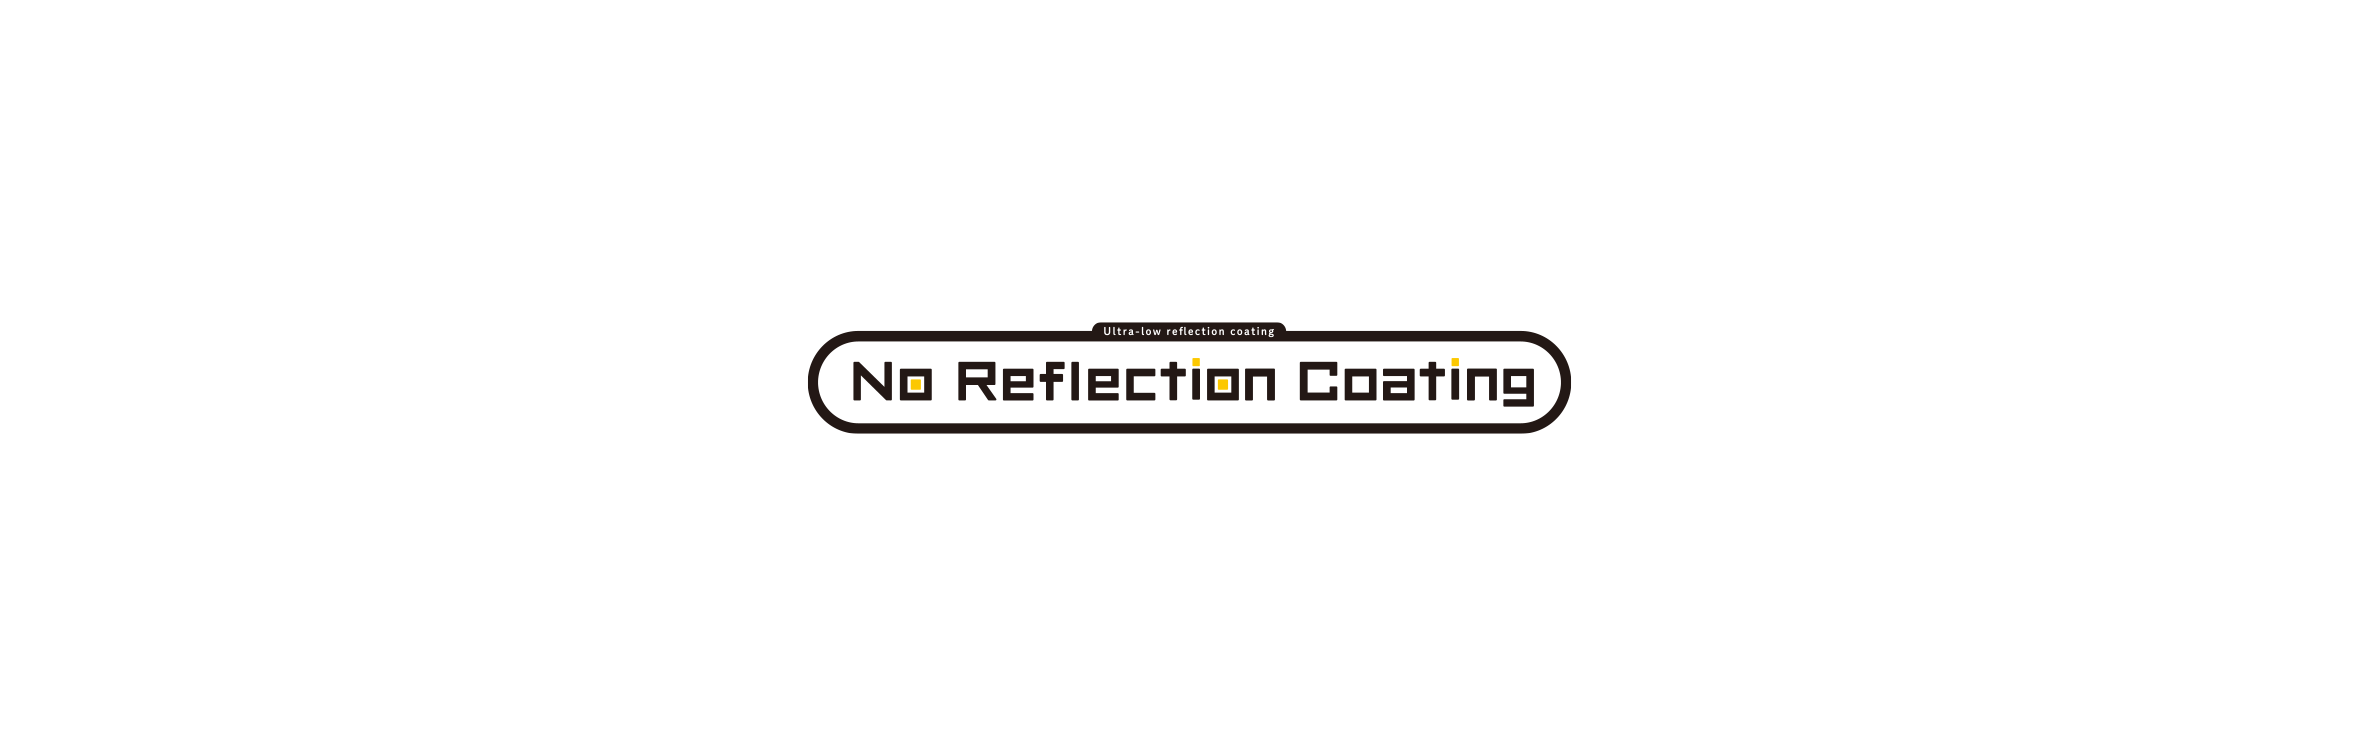 No Reflection Coating